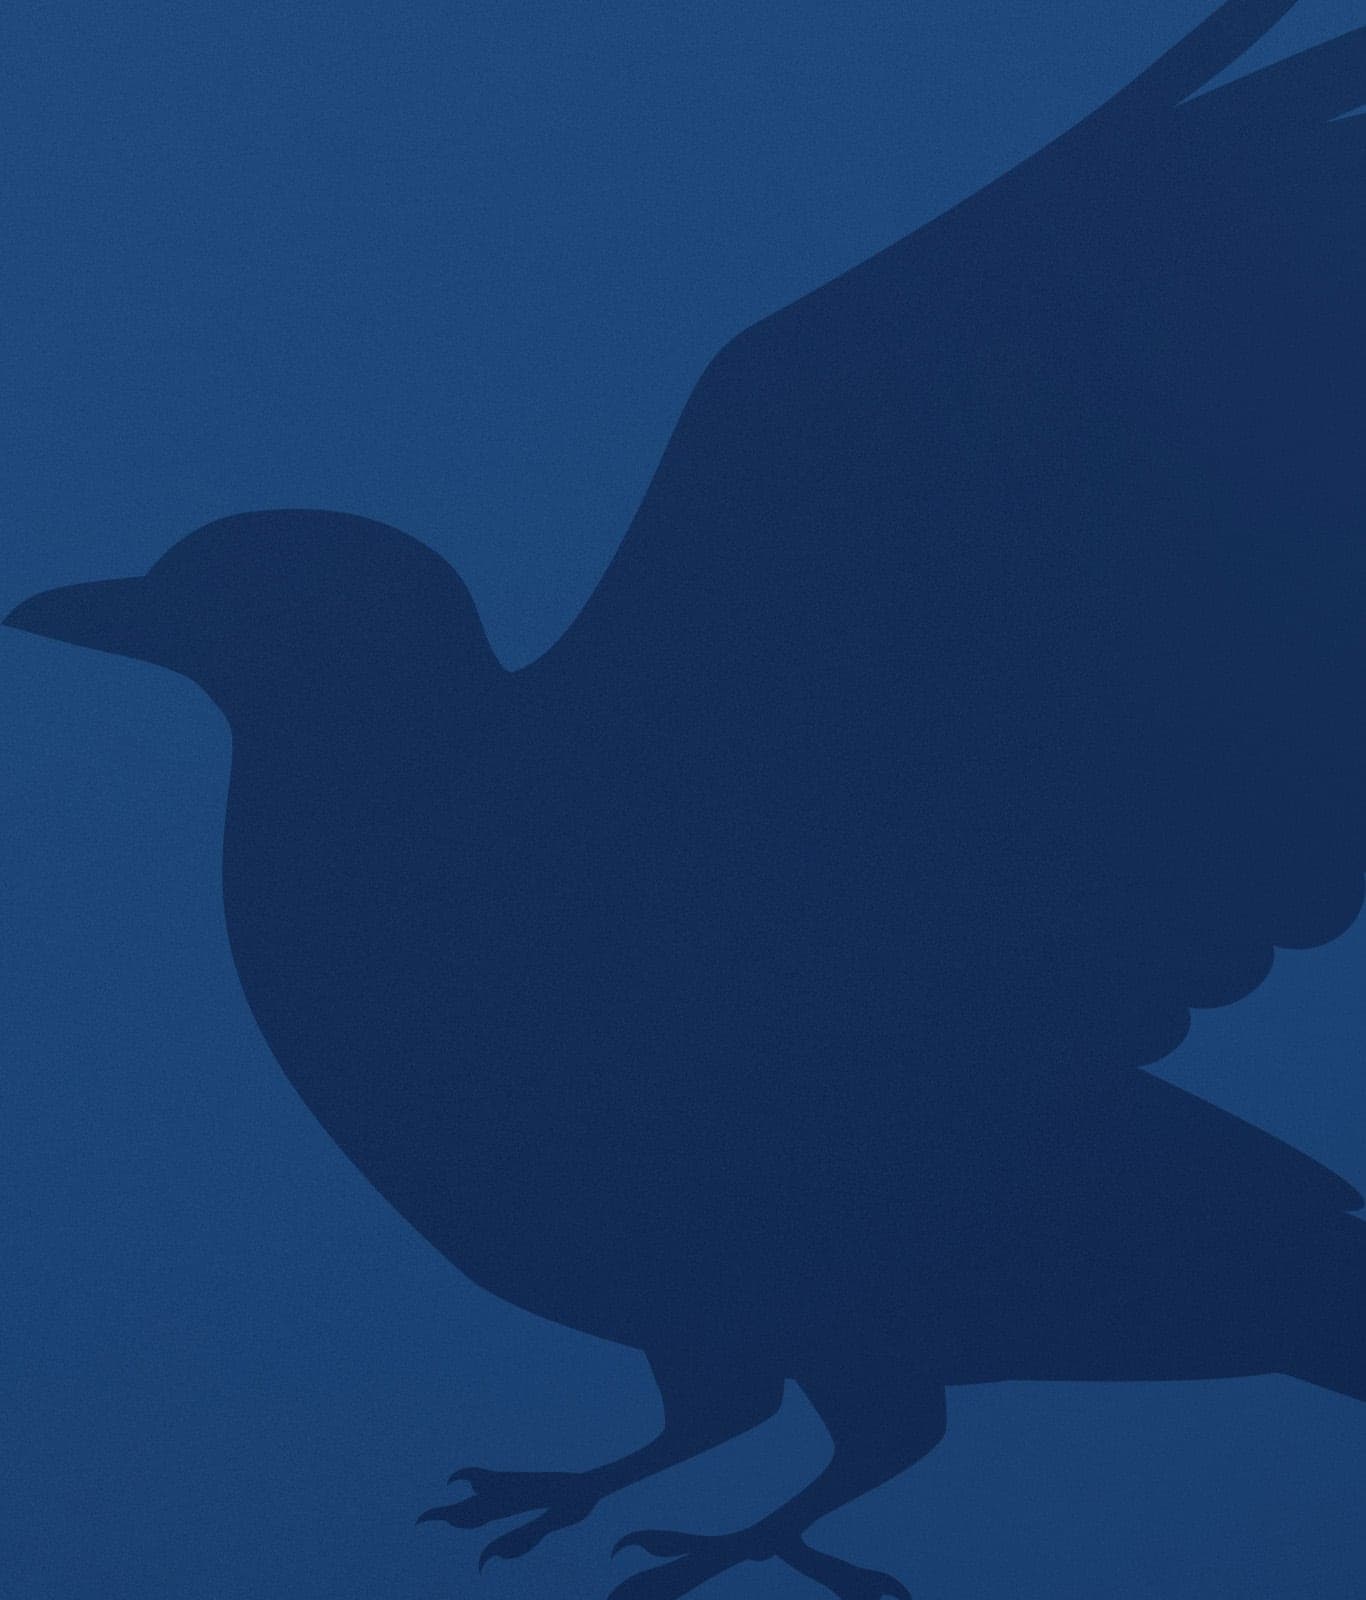 Cuervo de Ravenclaw sobre un fondo azul.